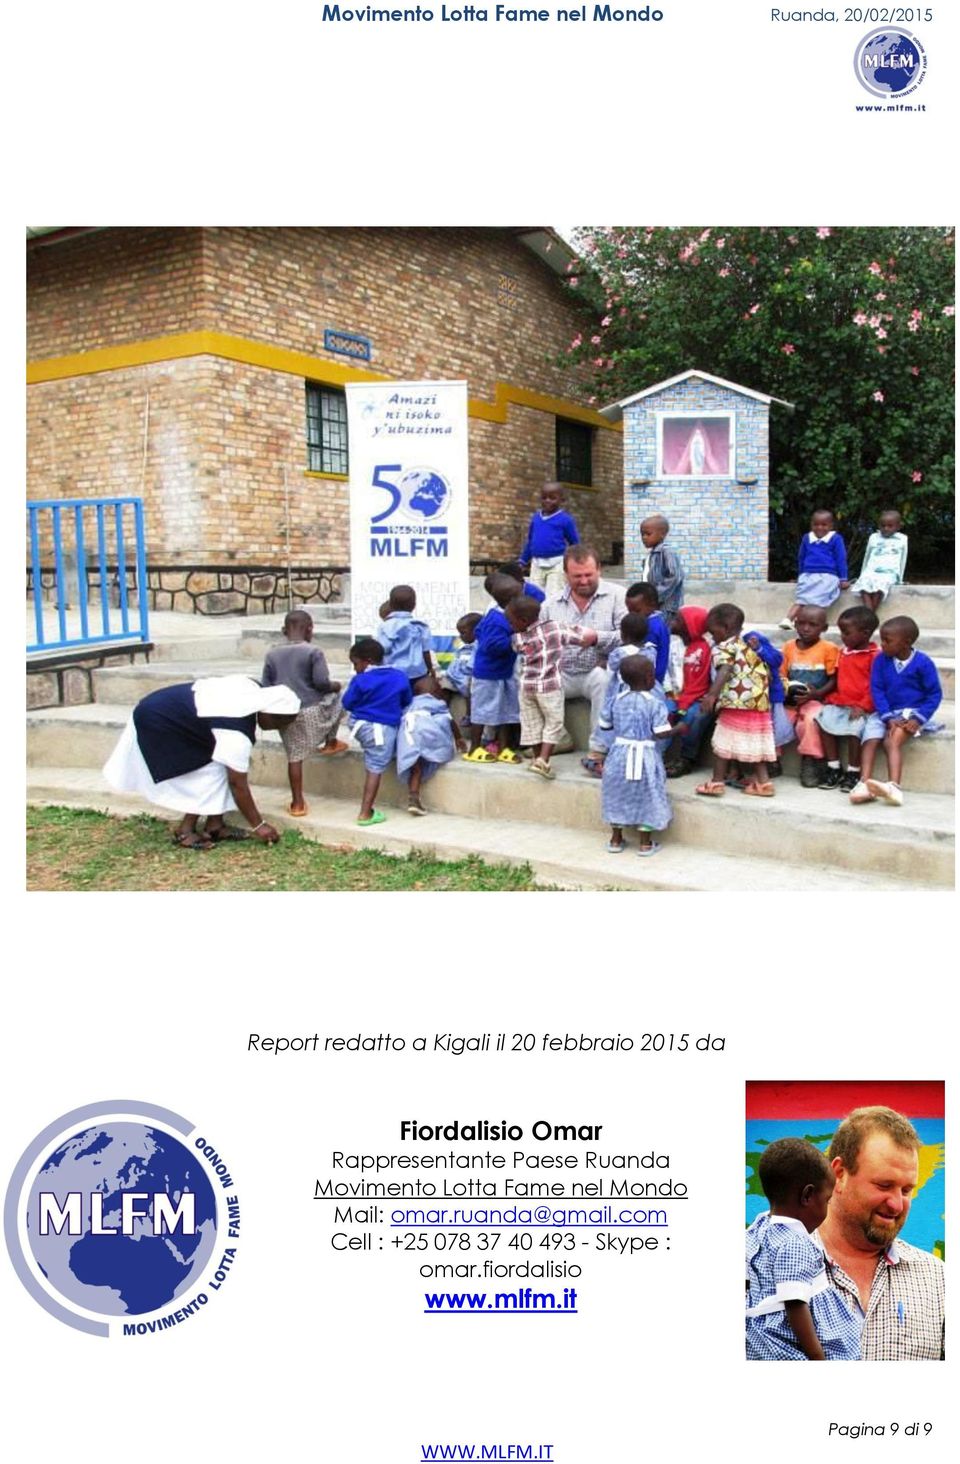 Lotta Fame nel Mondo Mail: omar.ruanda@gmail.